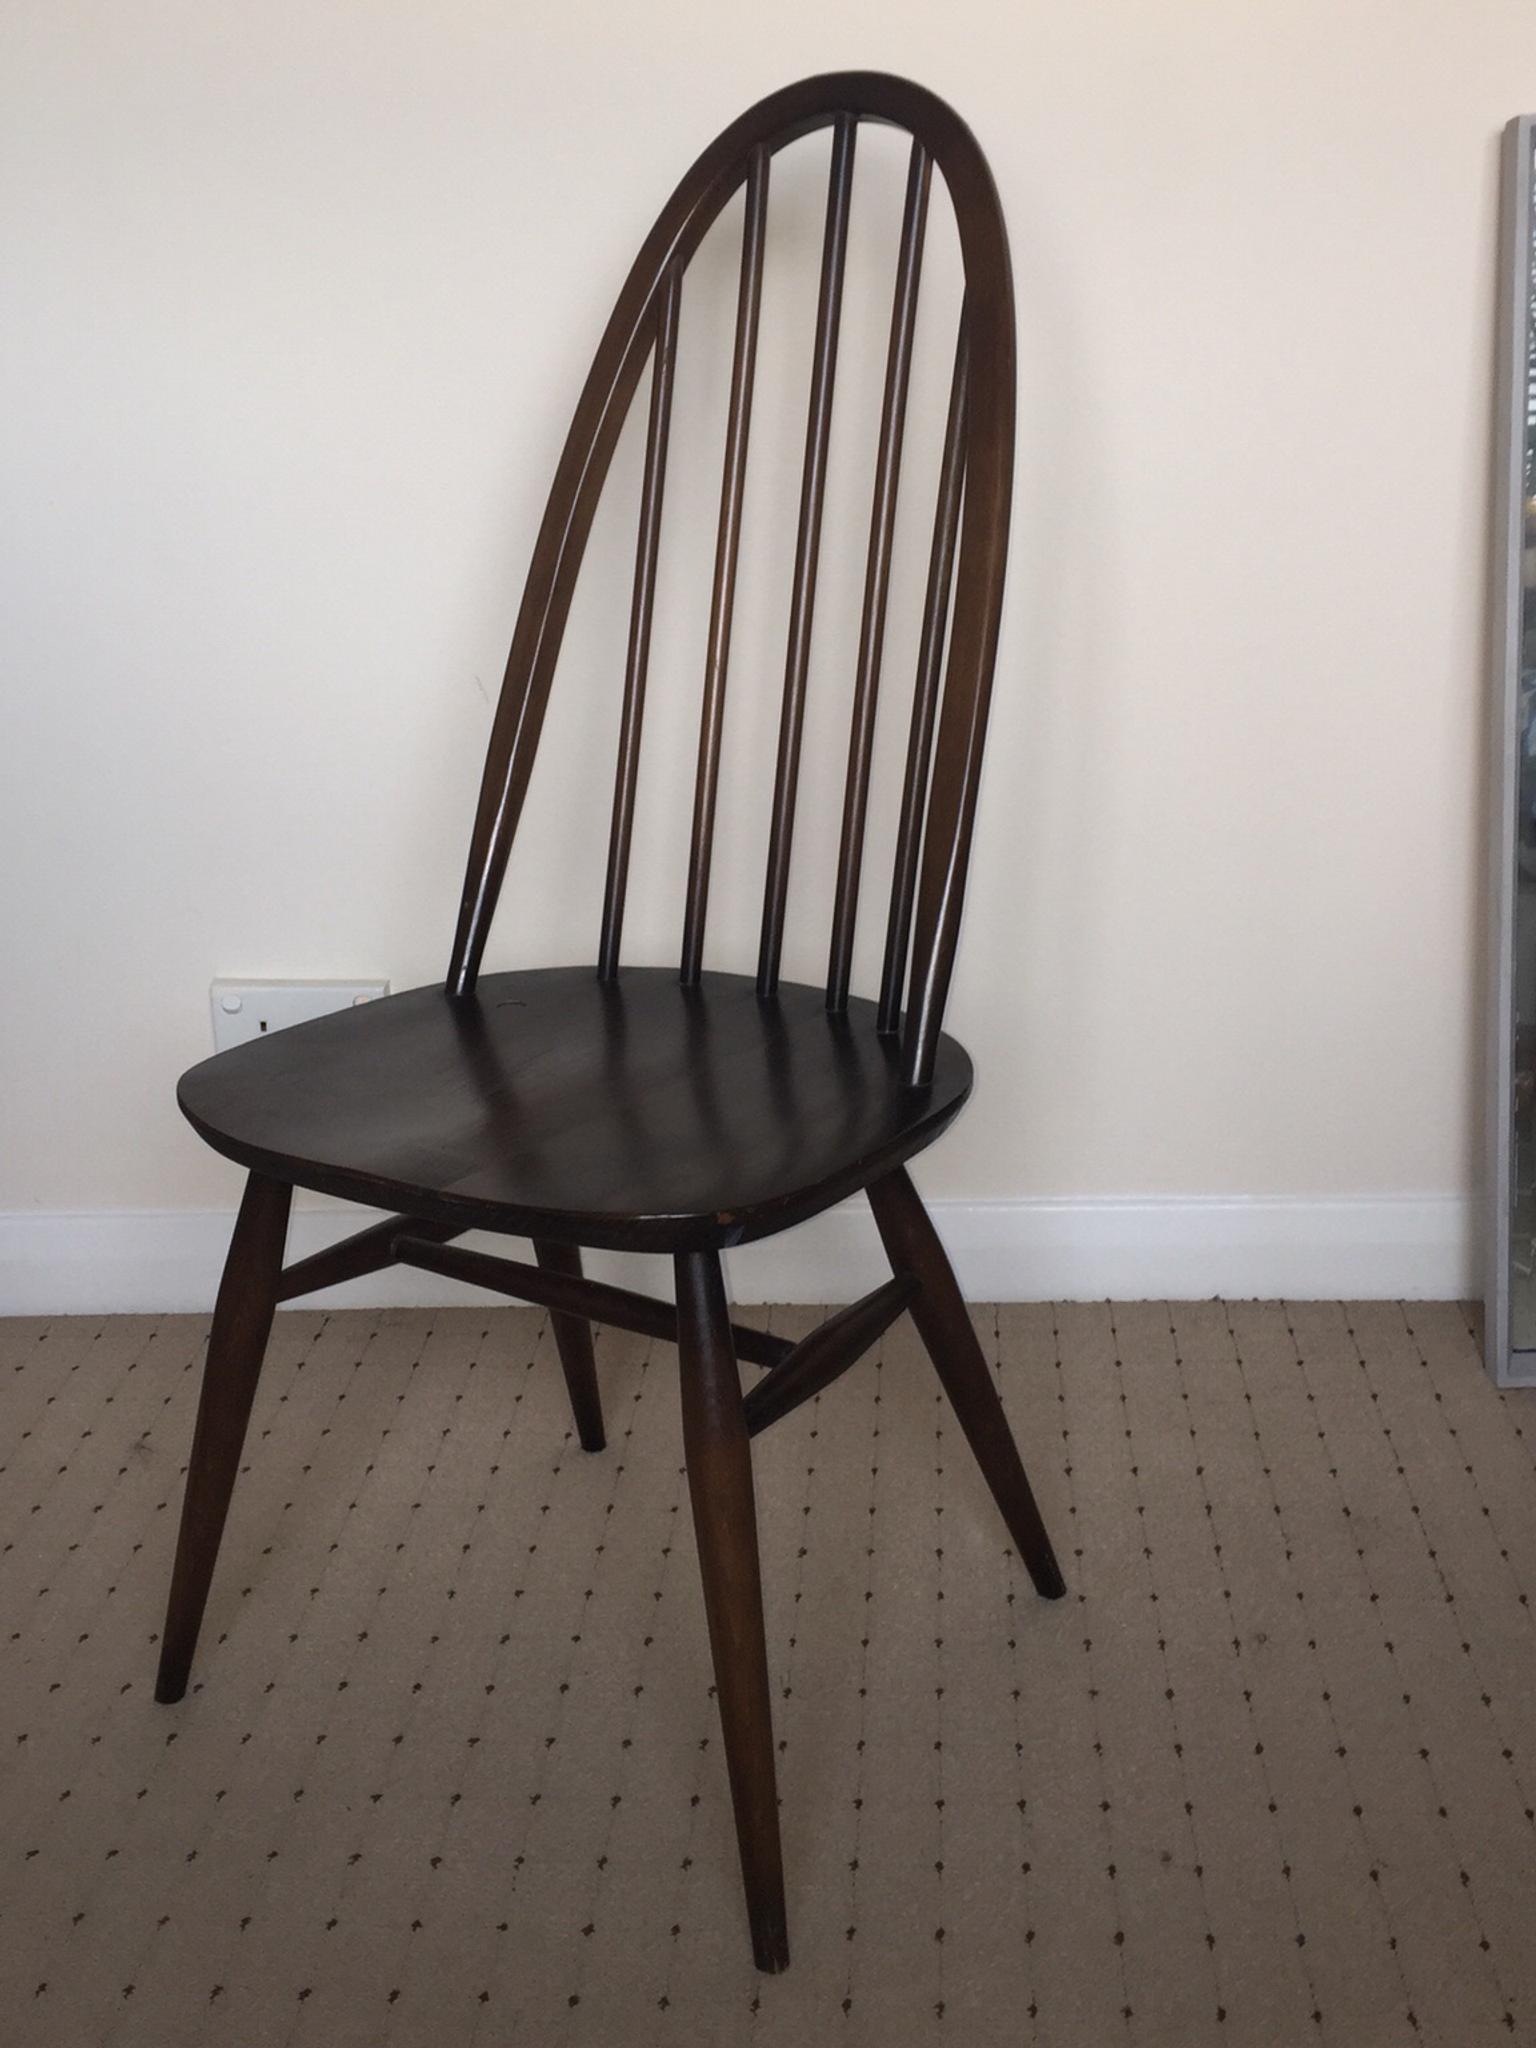 Ercol Windsor Quaker Chair 365 Model In Rh12 Horsham Fur 20 00